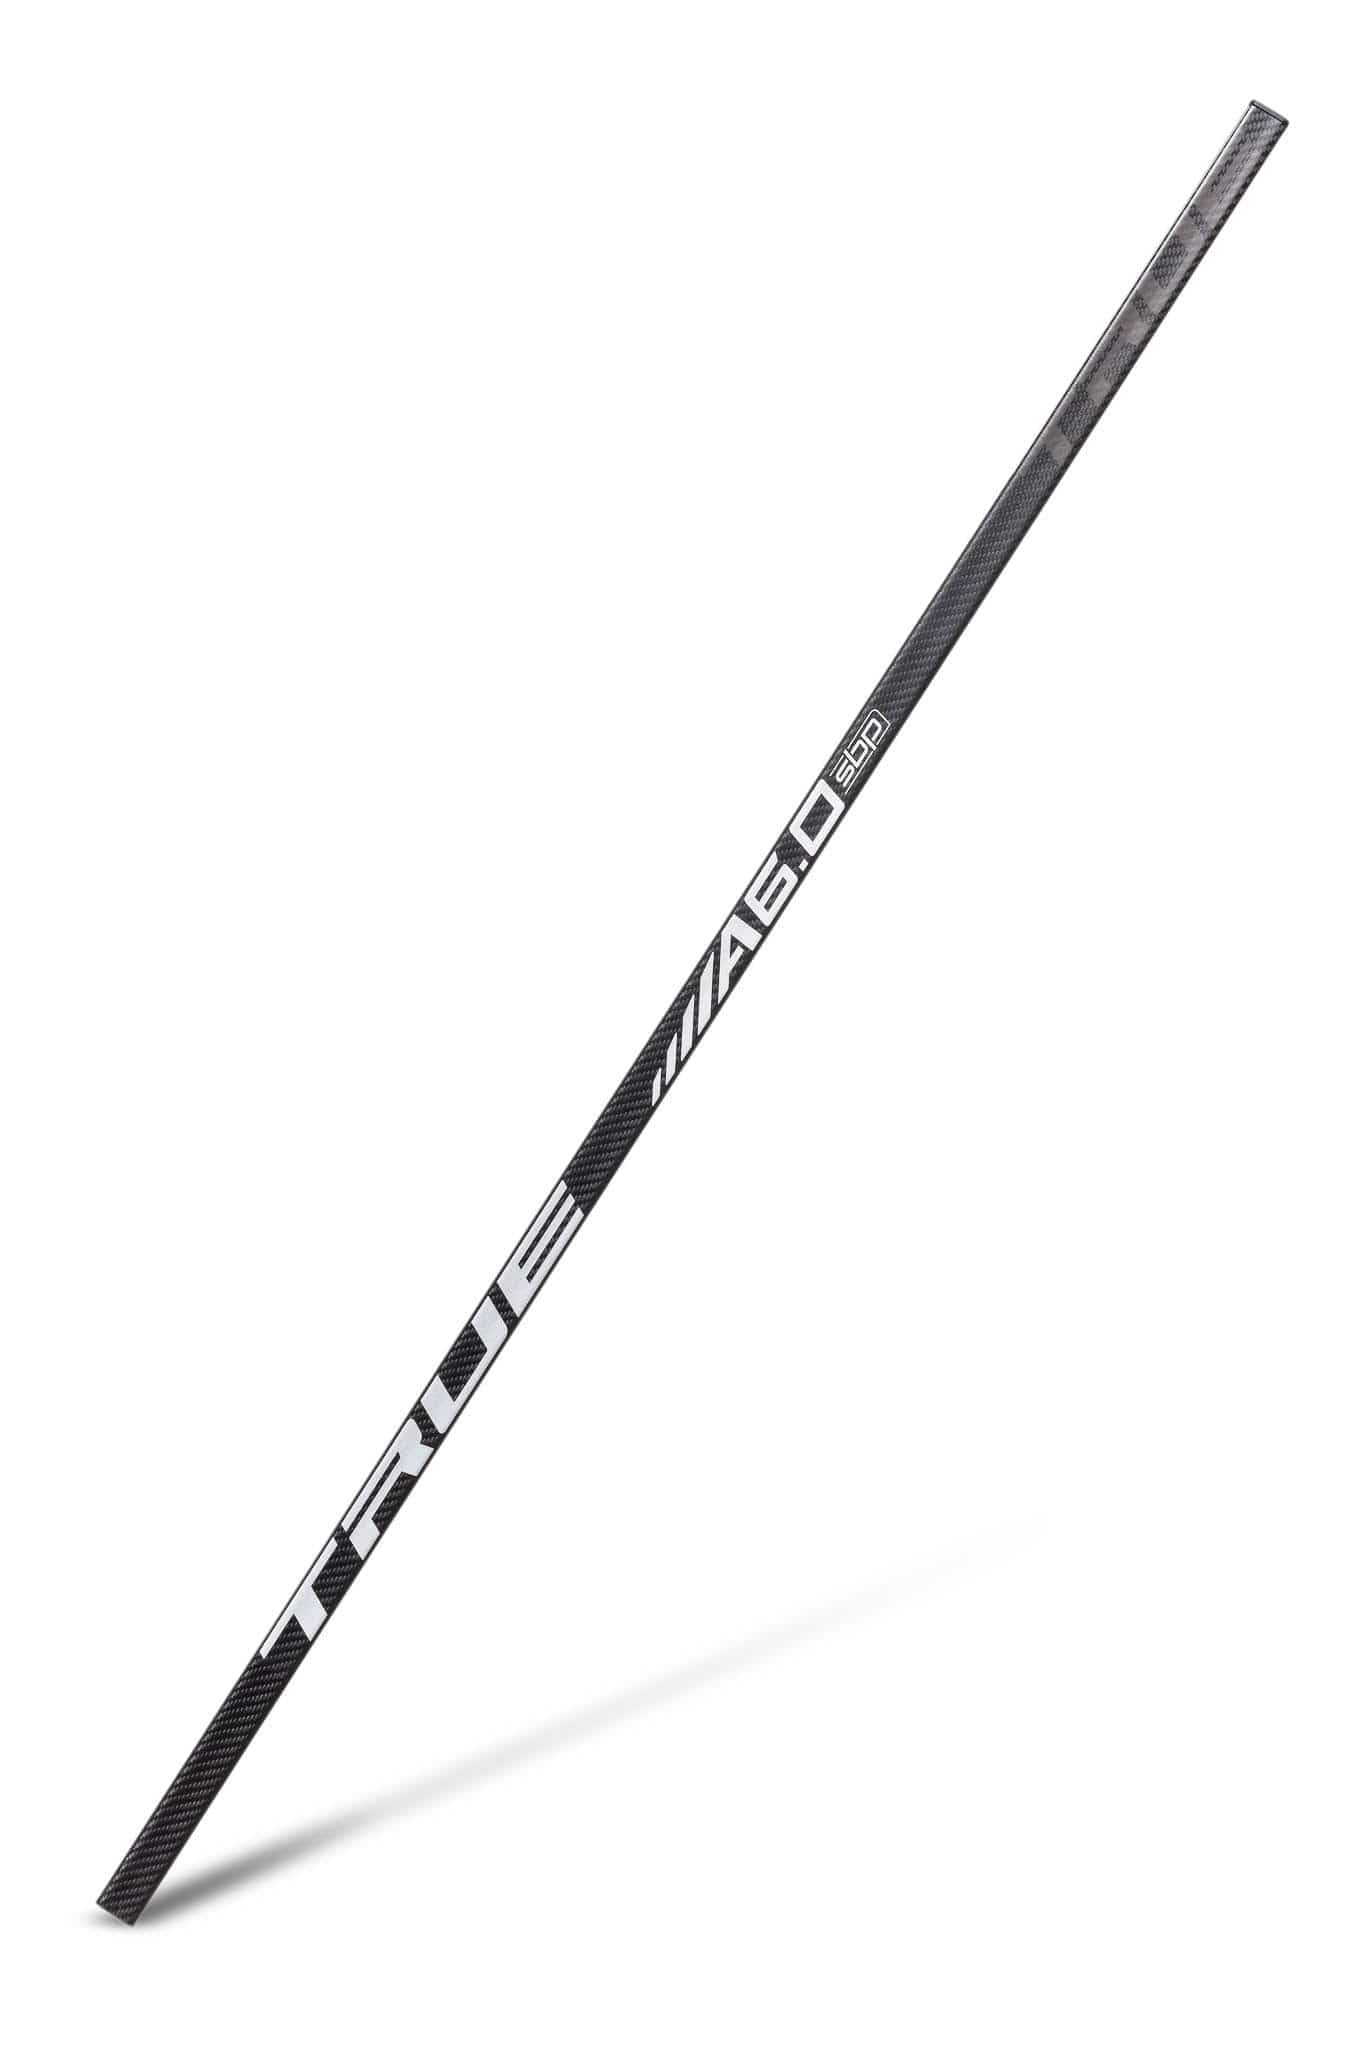 TRUE A6.0 SBP Grip Senior Hockey Shaft - Standard Hosel